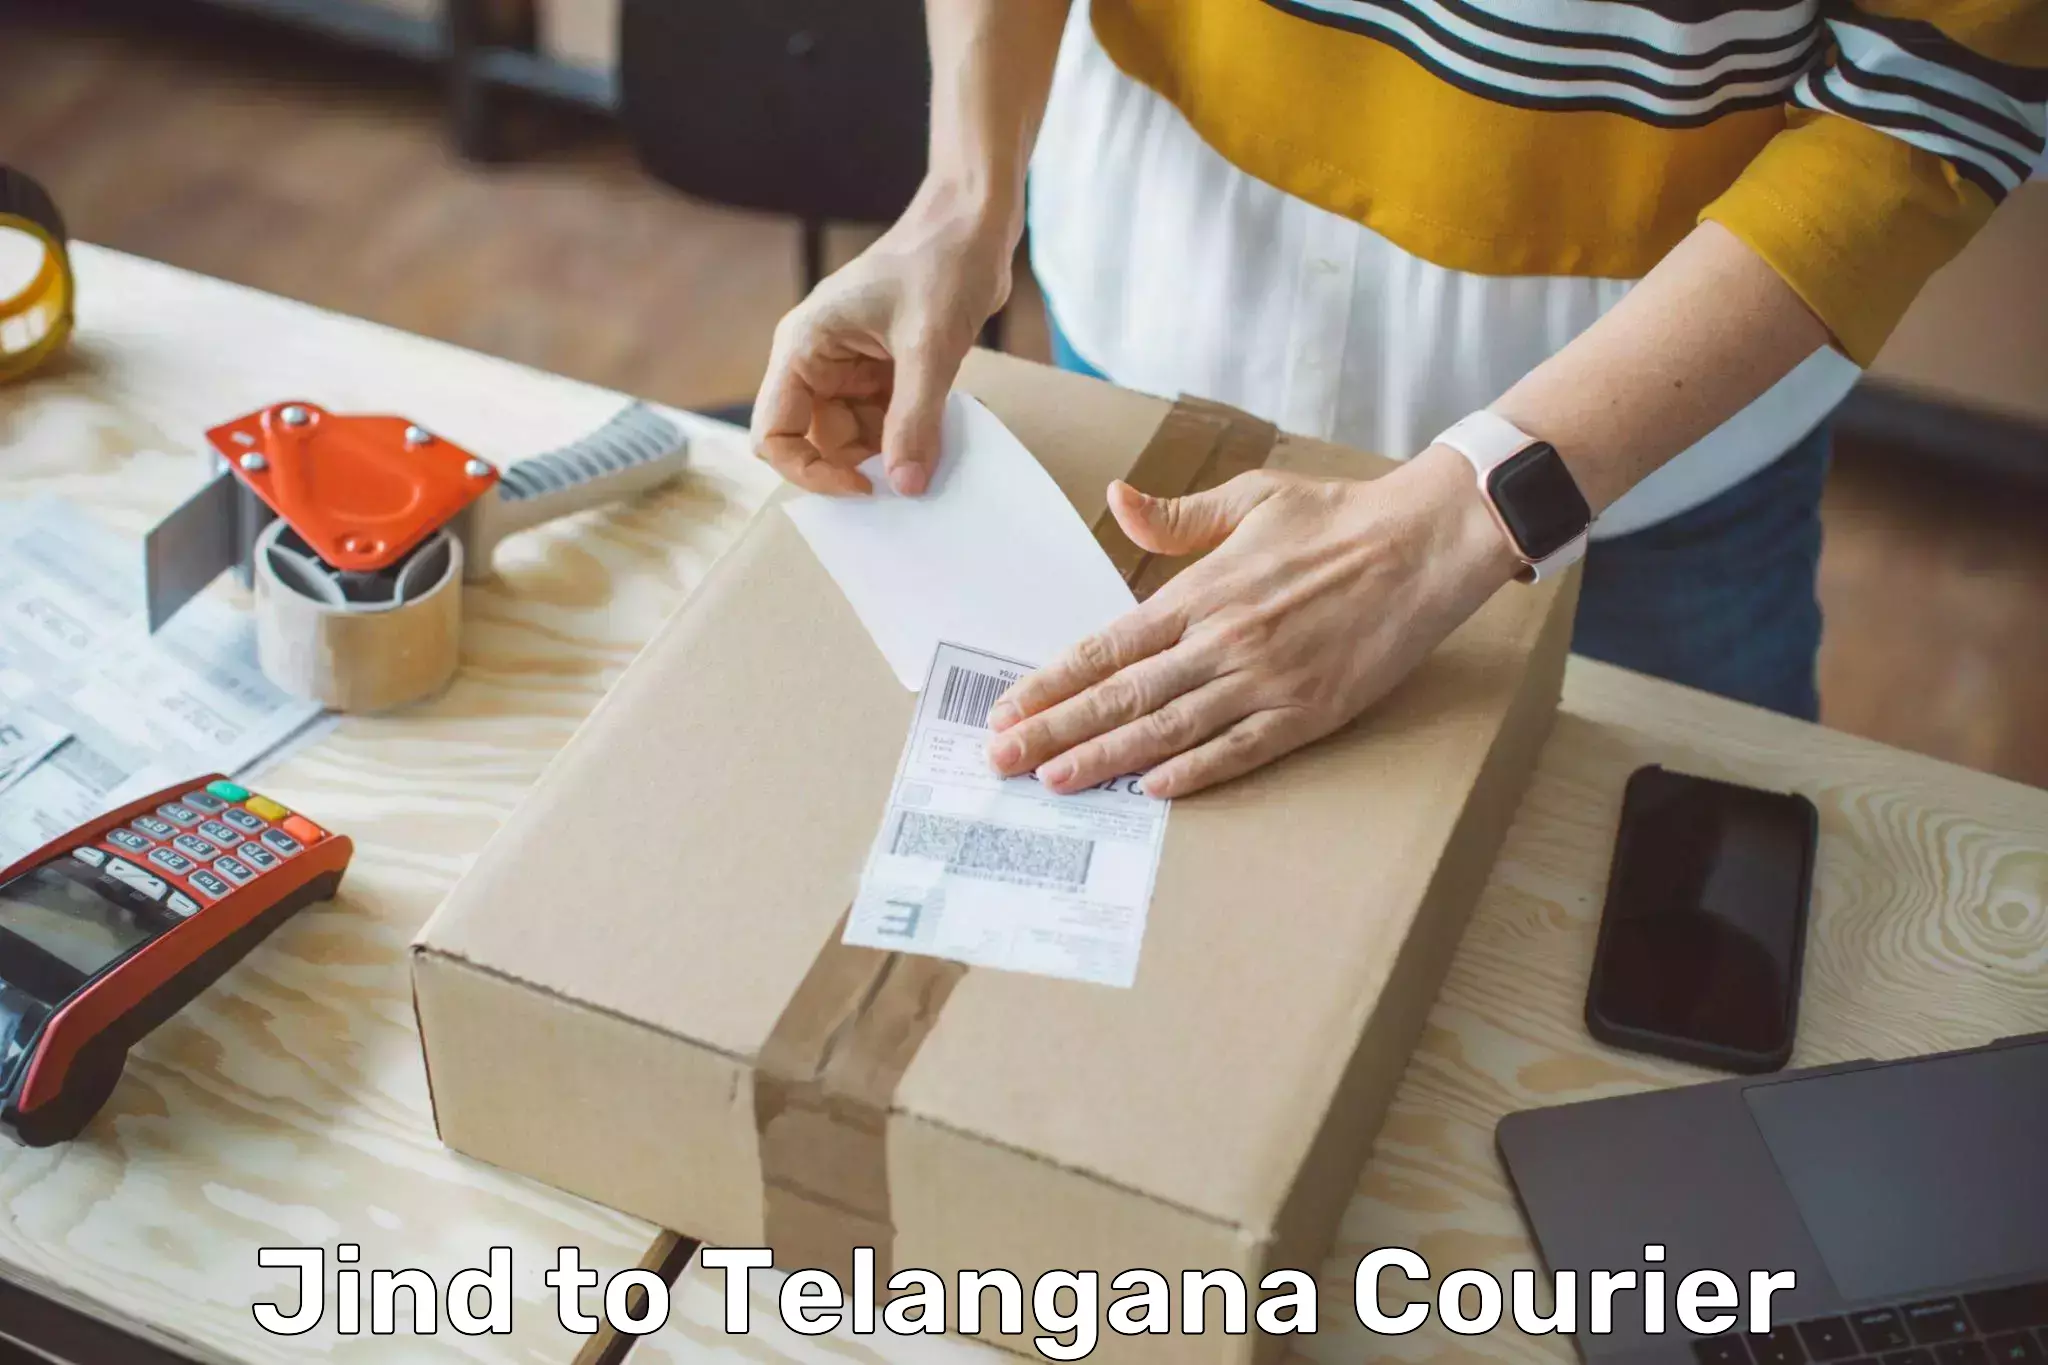 Bulk shipping discounts Jind to Telangana